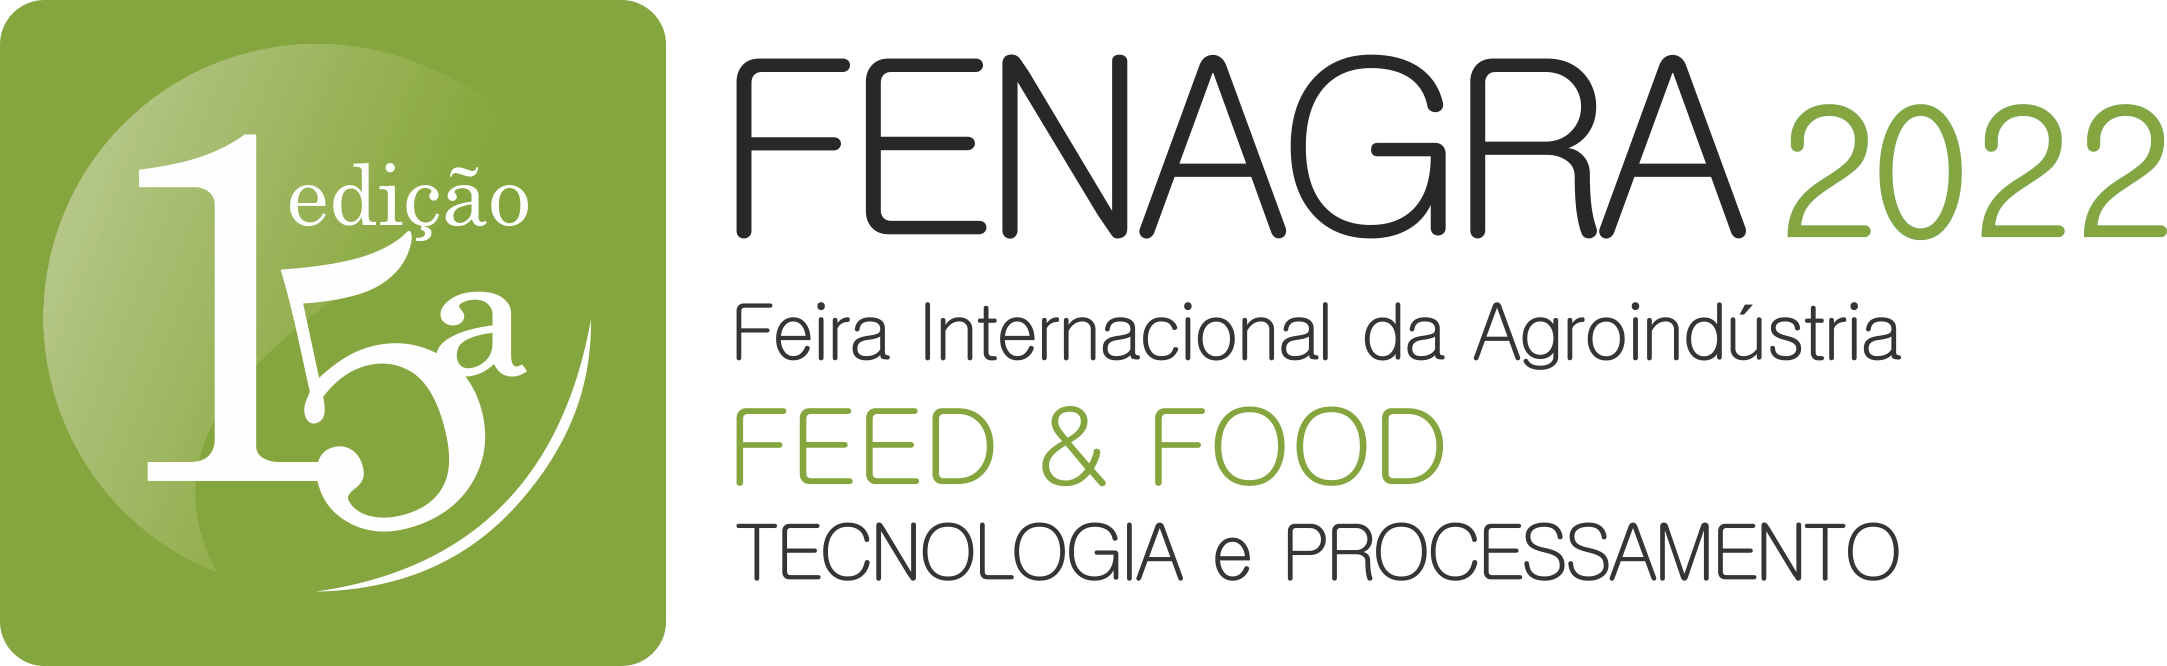 Fenagra